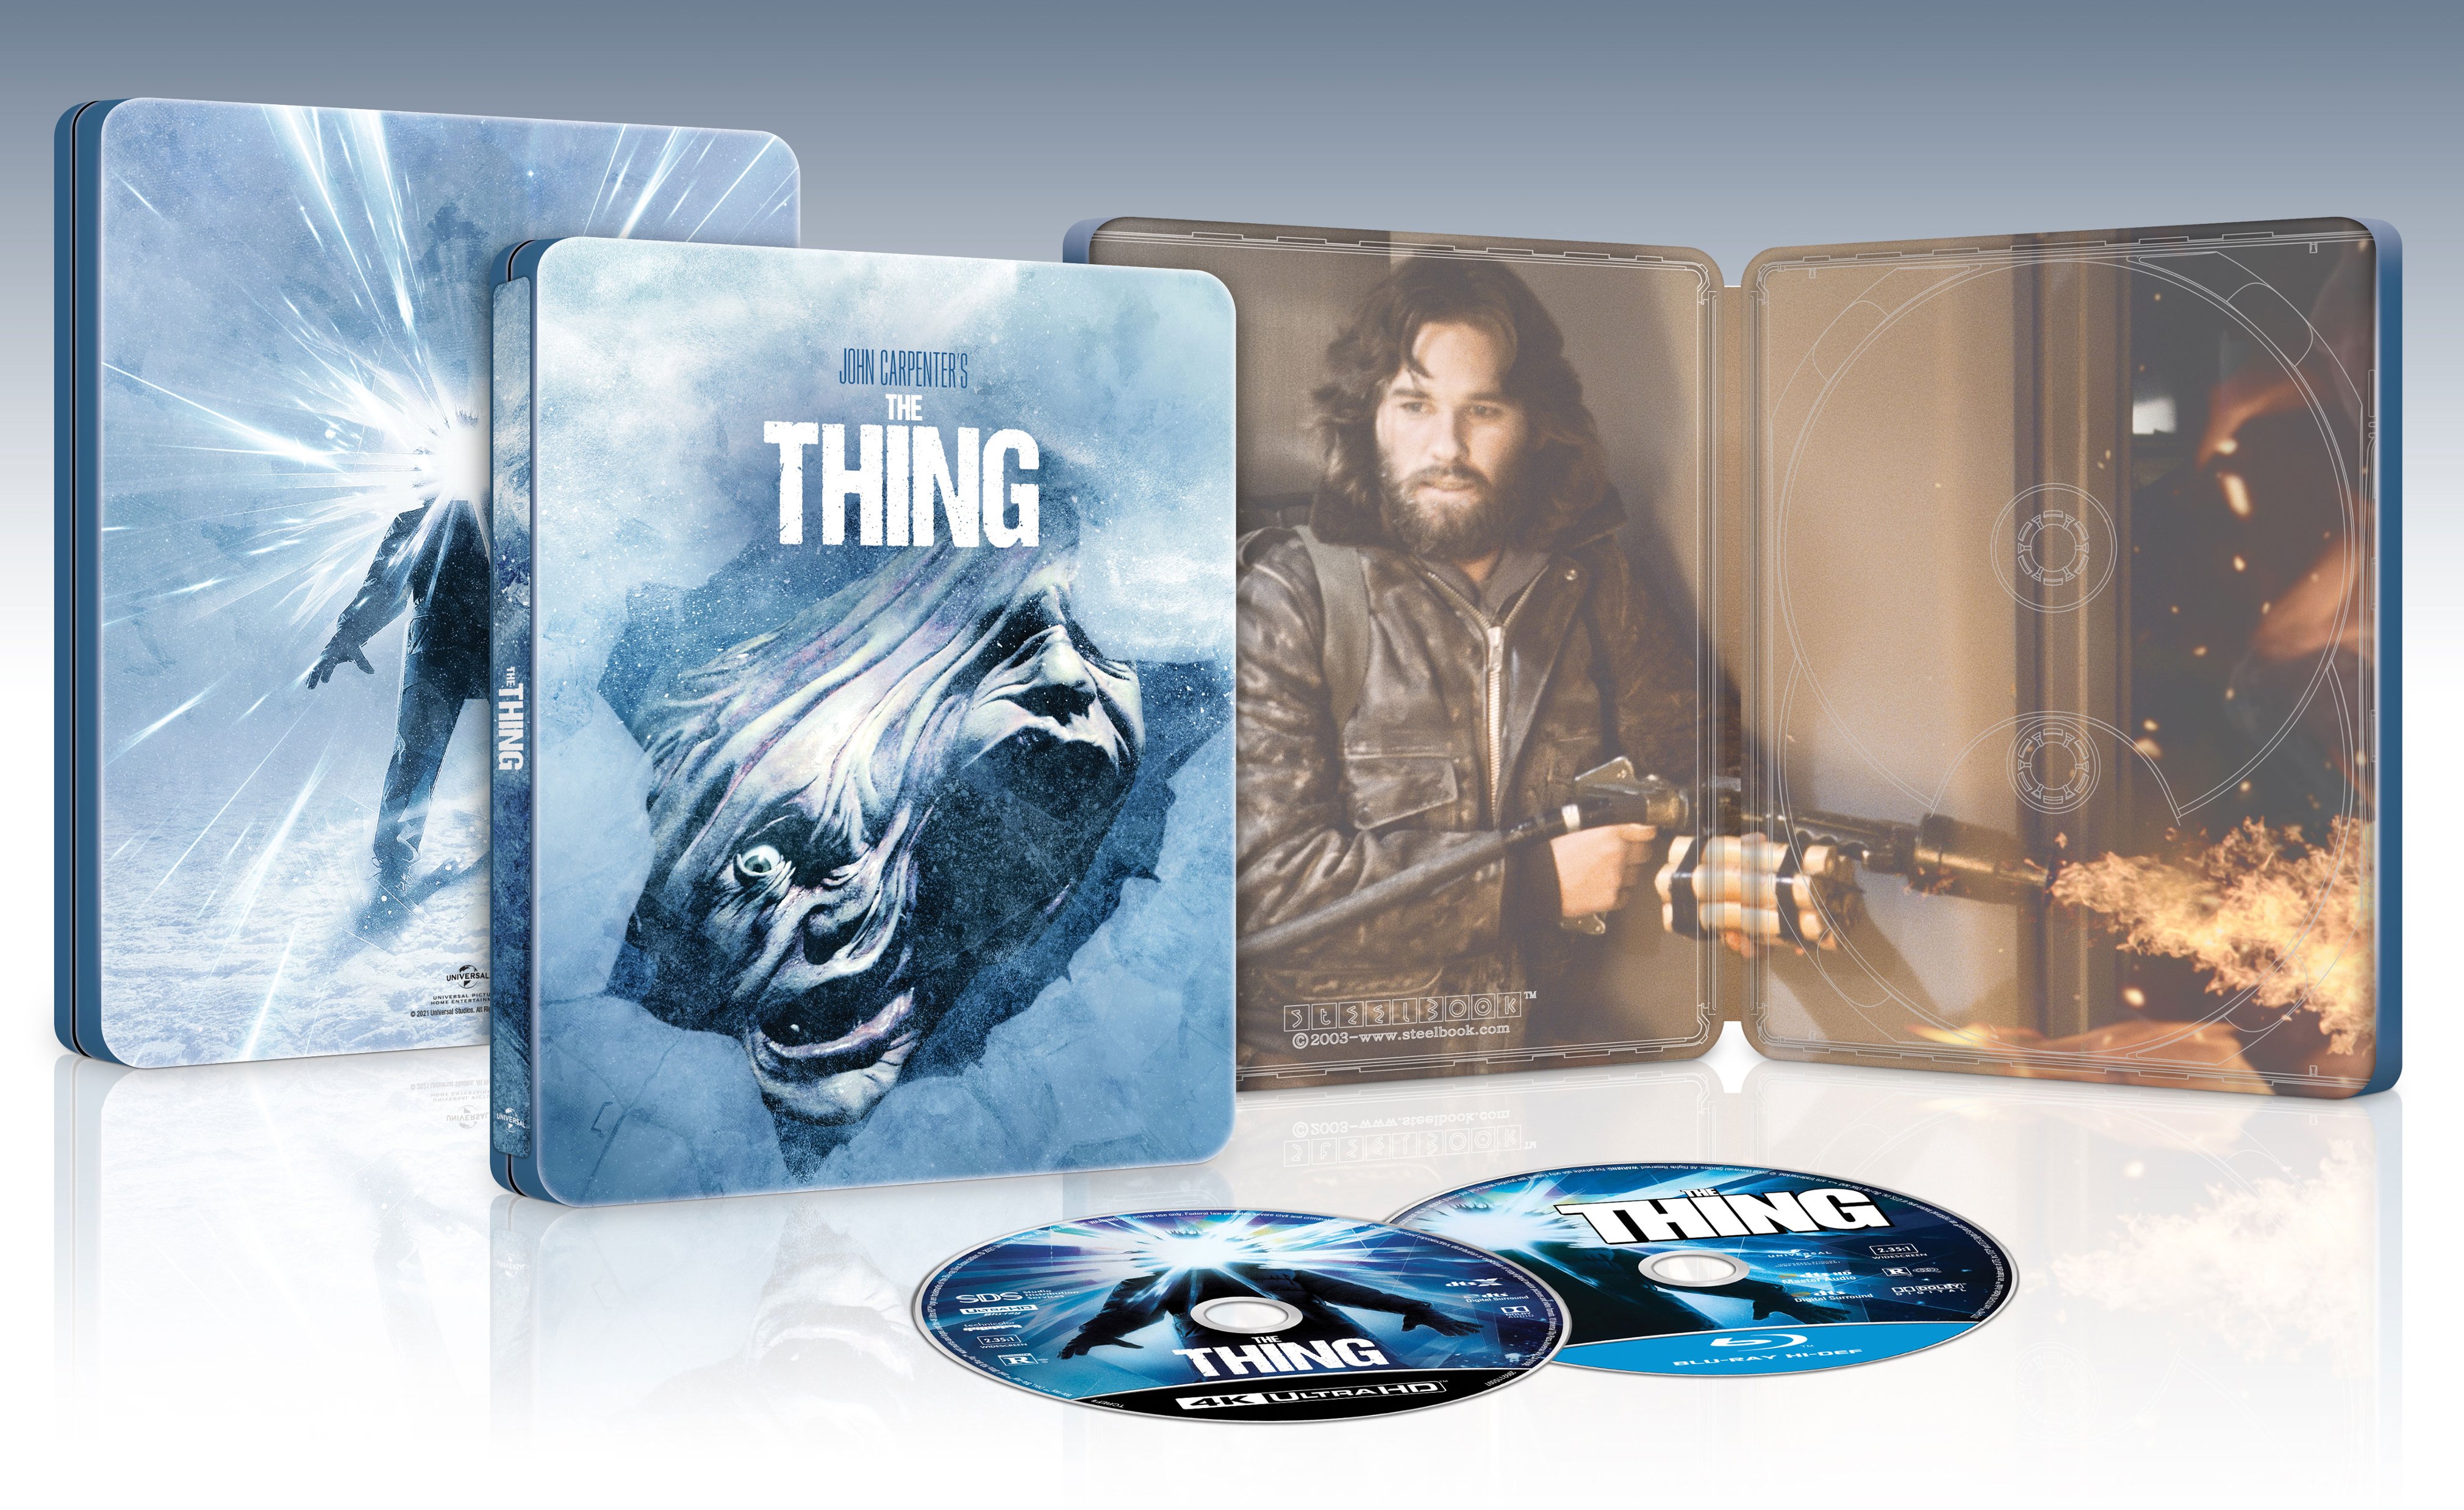 The Thing [SteelBook] [4K Ultra HD Blu-ray/Blu-ray] [Only @ Best Buy]  [1982] - Best Buy